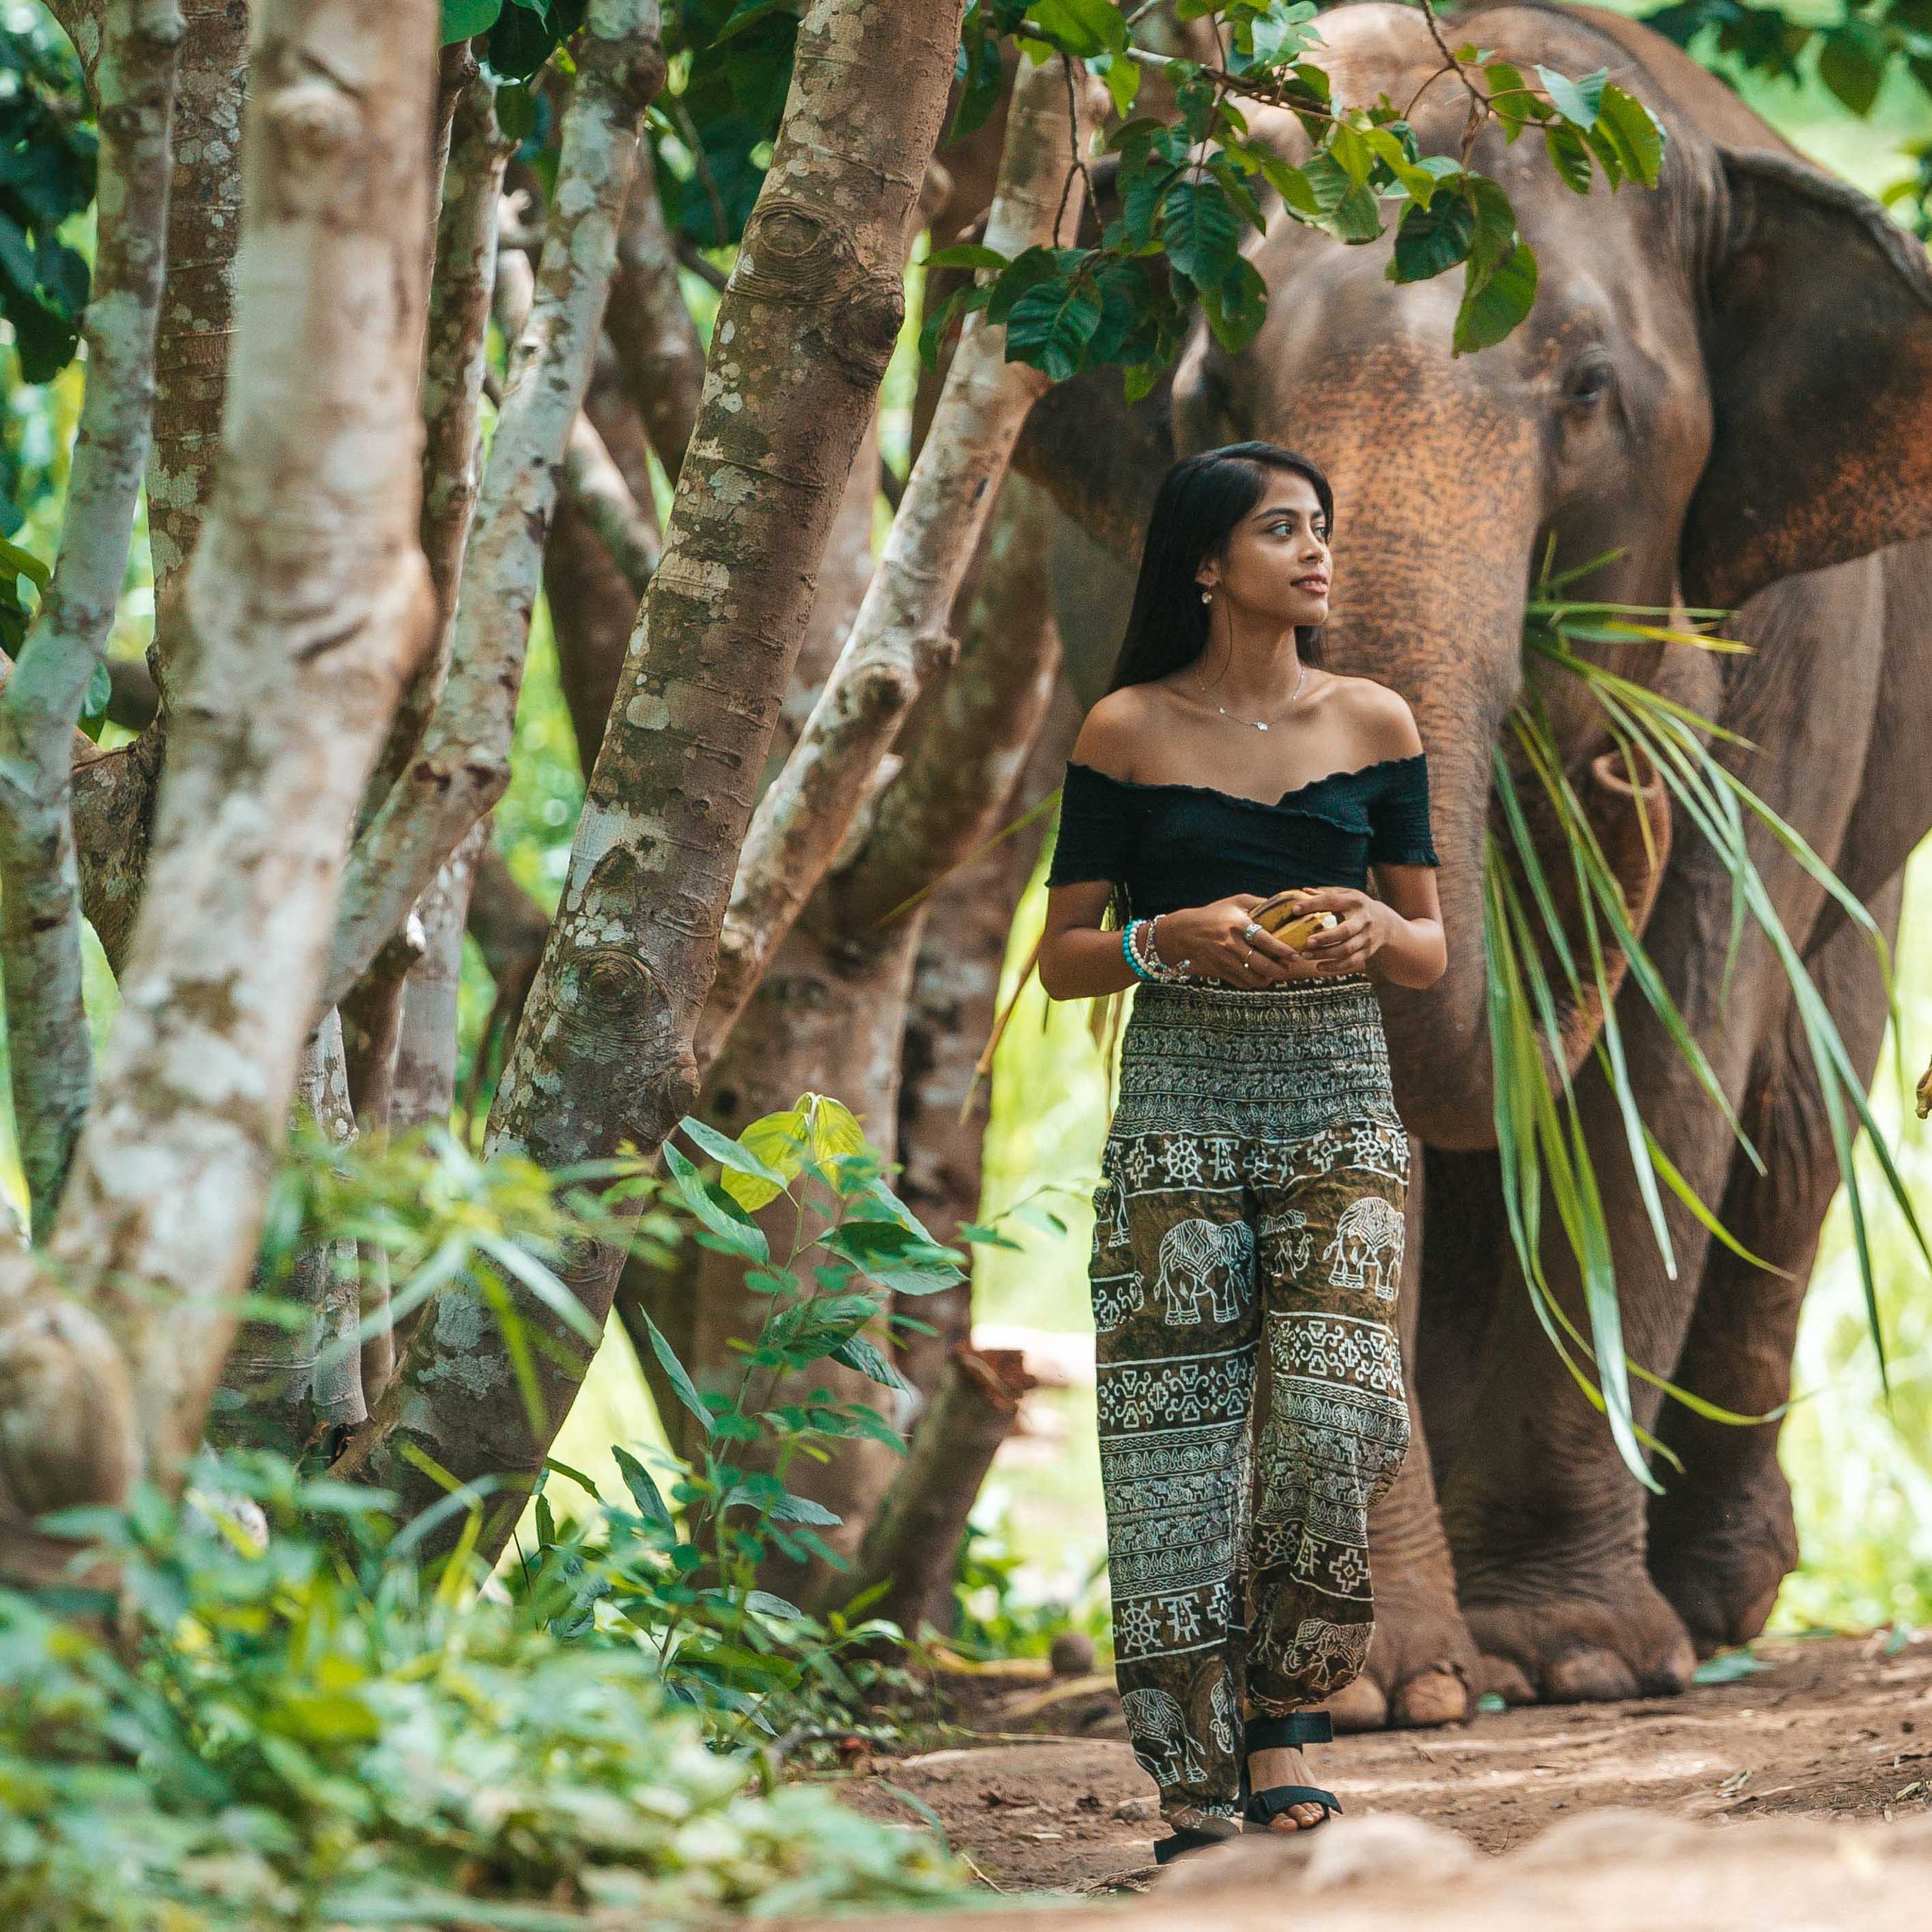 COLOMBO ELEPHANT PANTS - GREEN Elepanta Women's Pants - Buy Today Elephant Pants Jewelry And Bohemian Clothes Handmade In Thailand Help To Save The Elephants FairTrade And Vegan